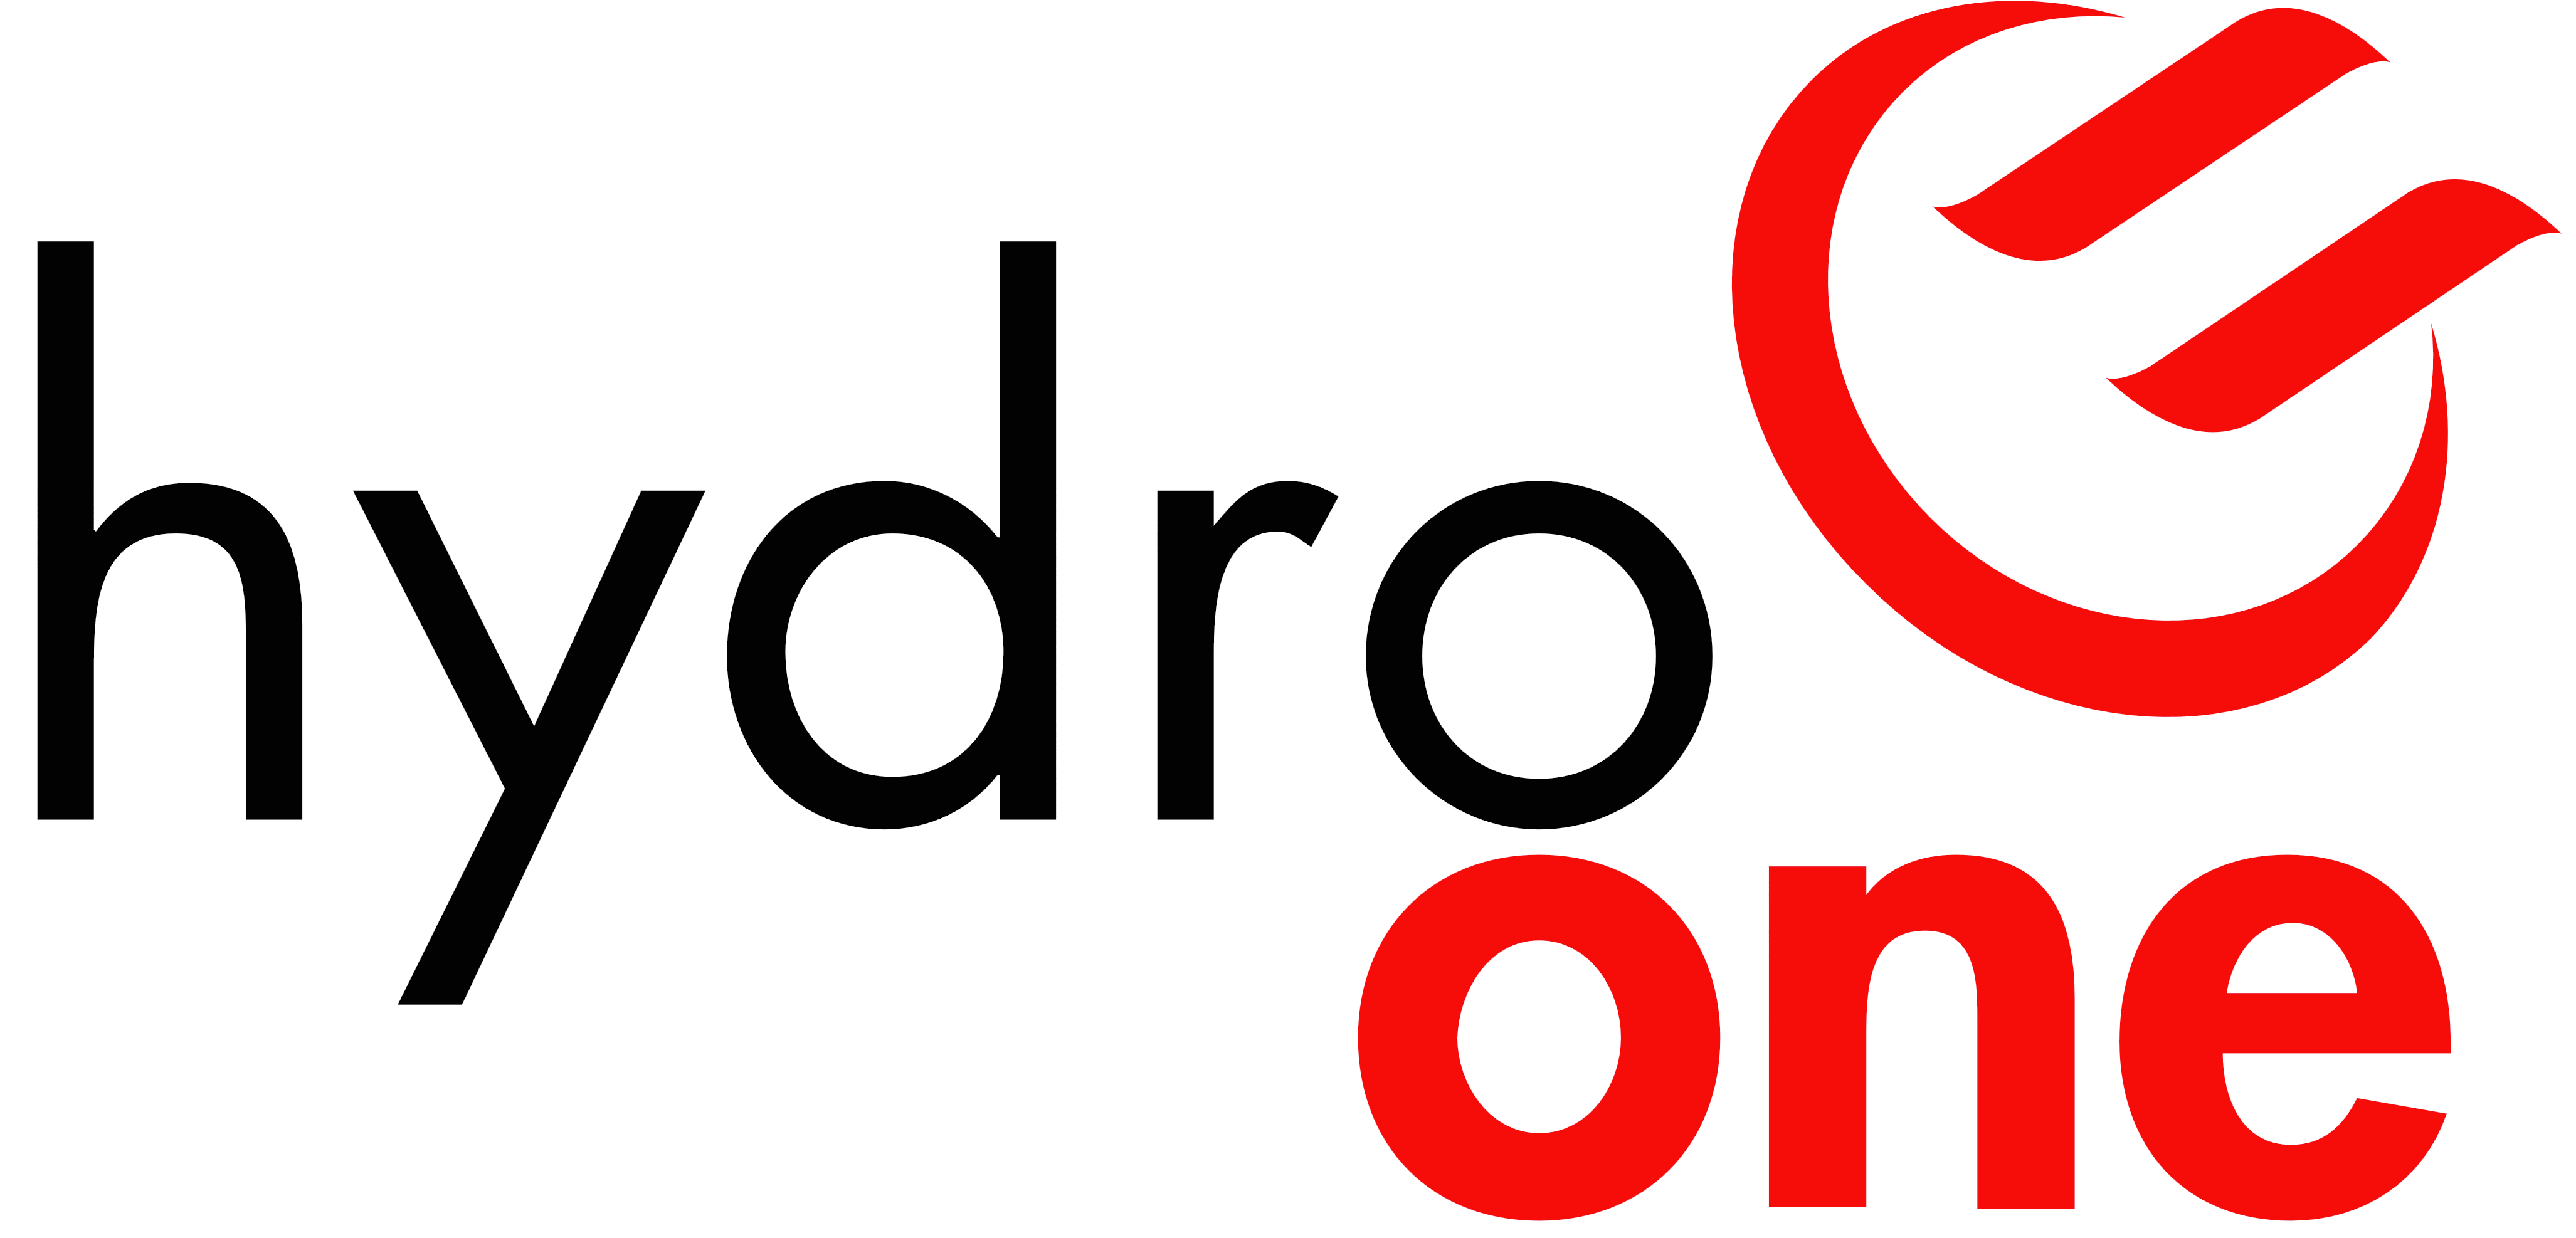 Onelogos Logo - Hydro One